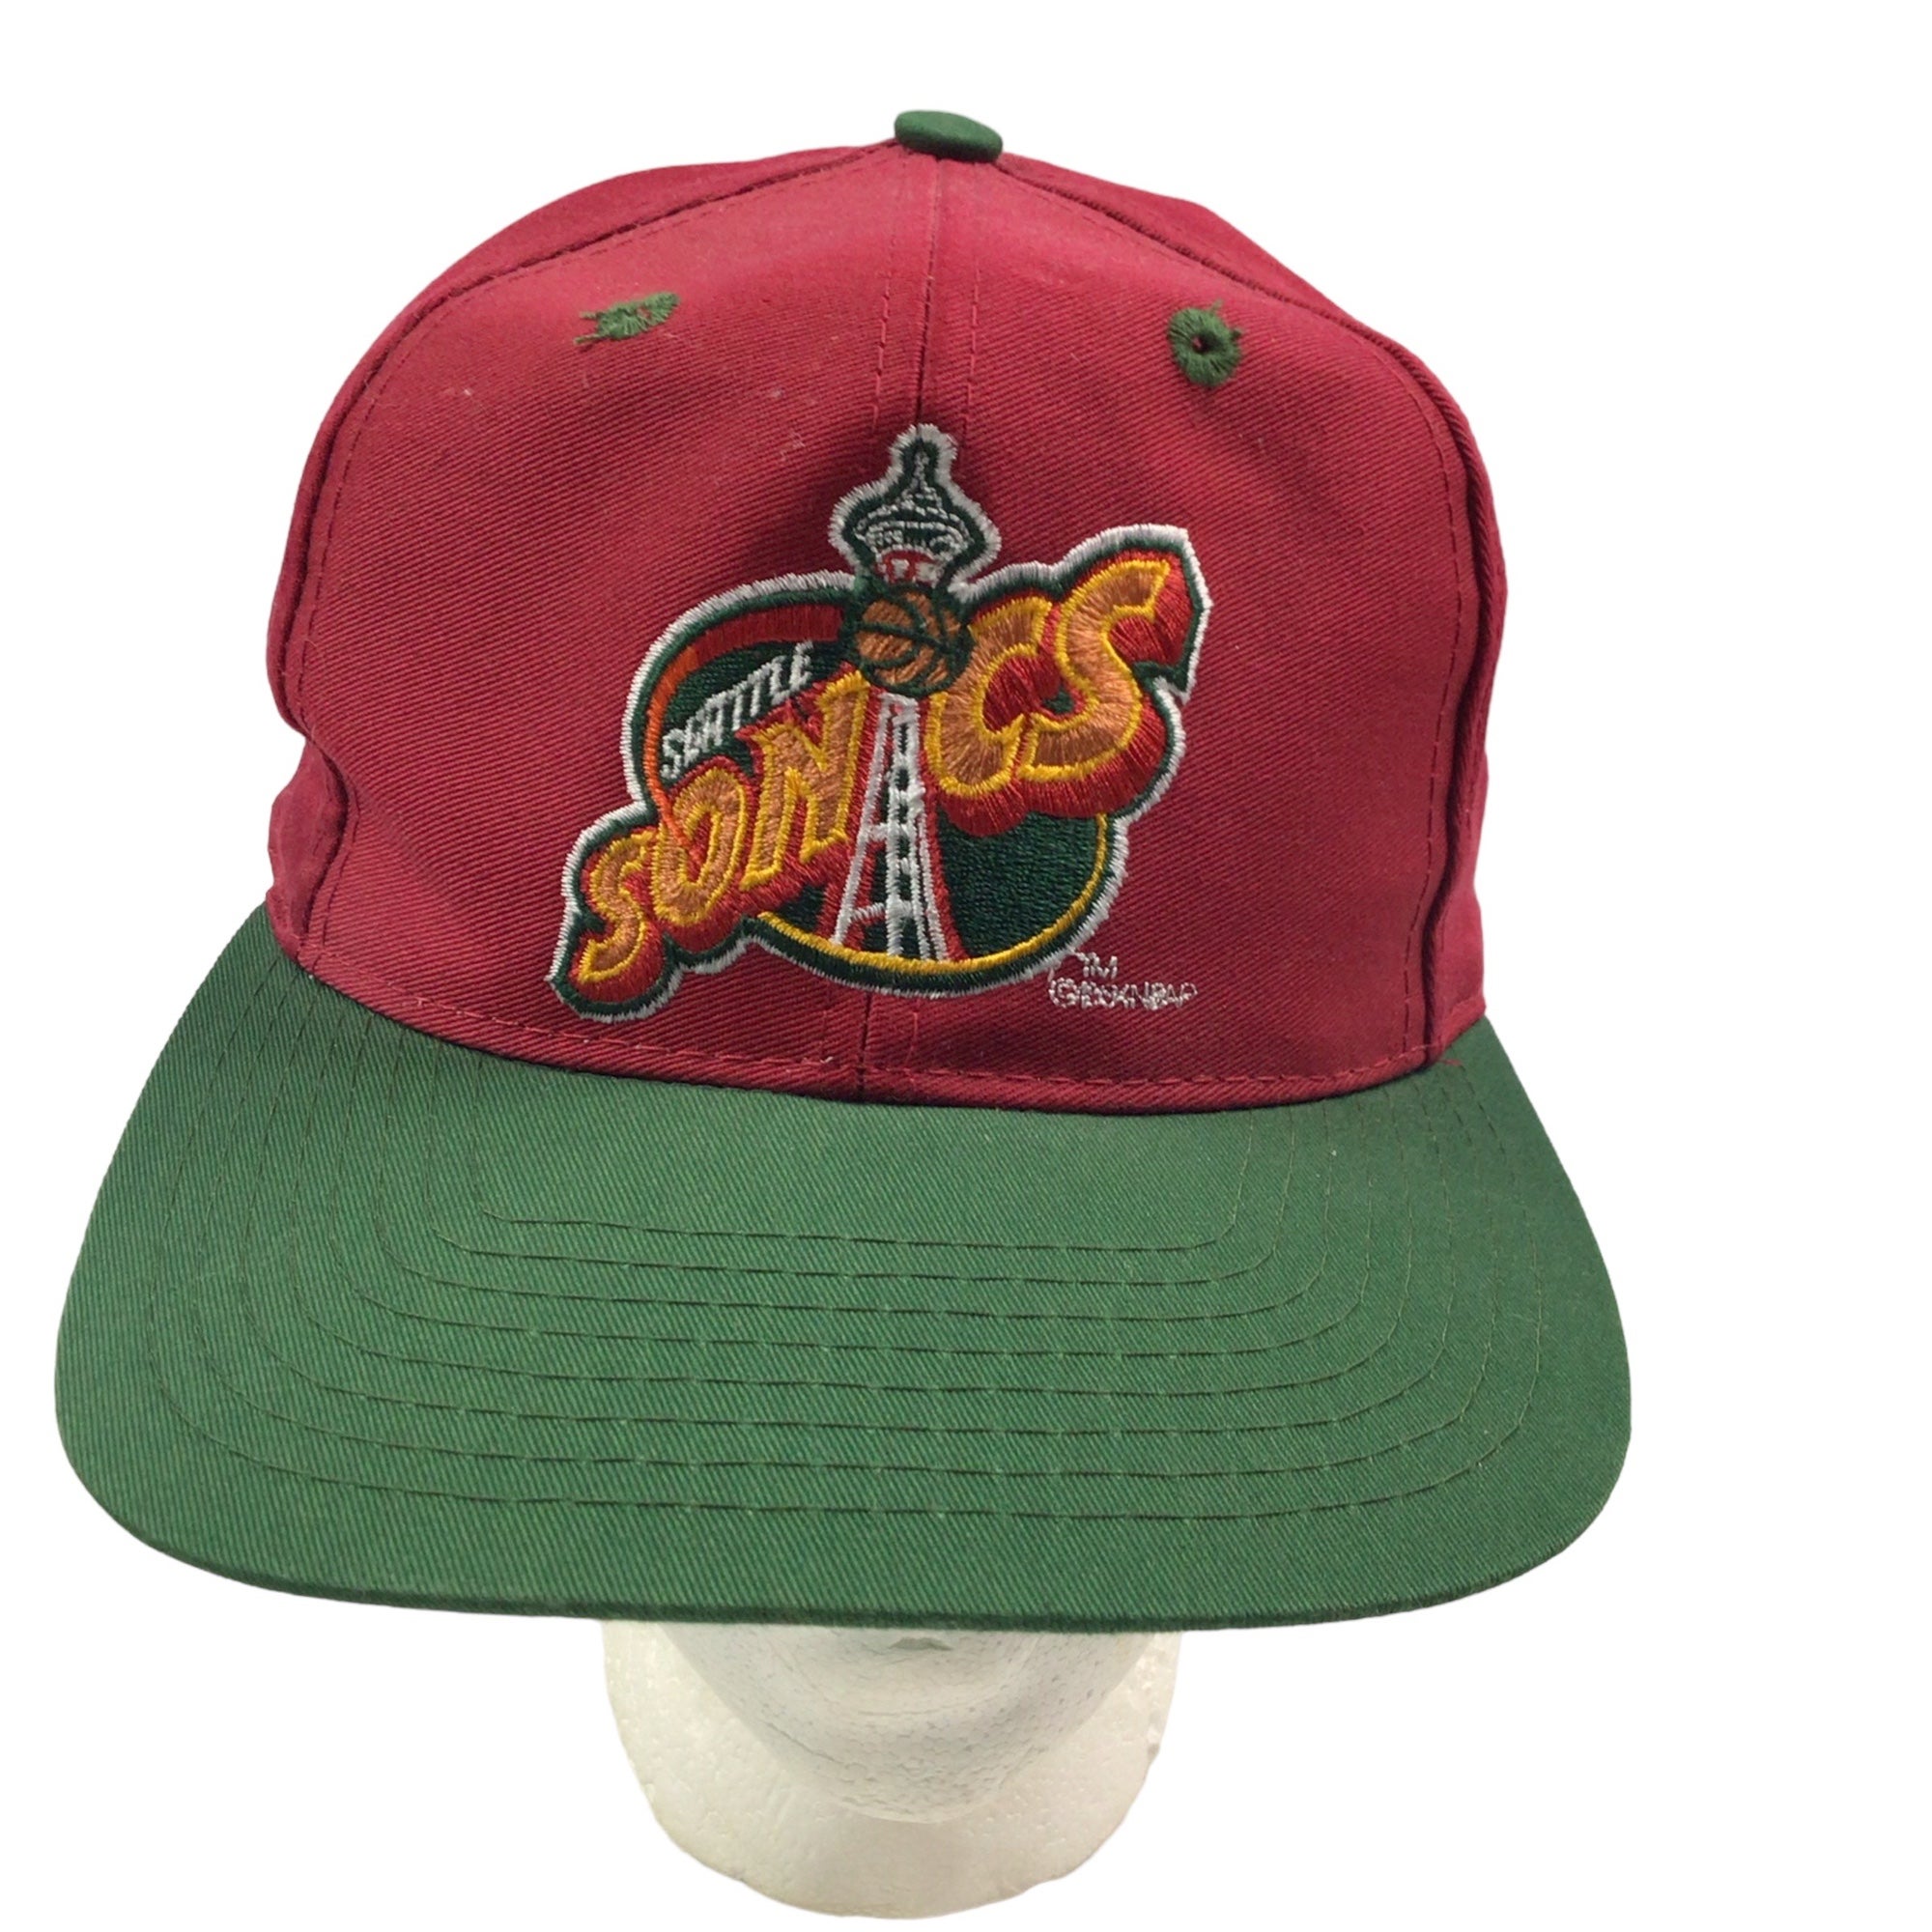 Seattle Supersonics NBA Vintage 90's Sports Specialties Hat Snapback Wave